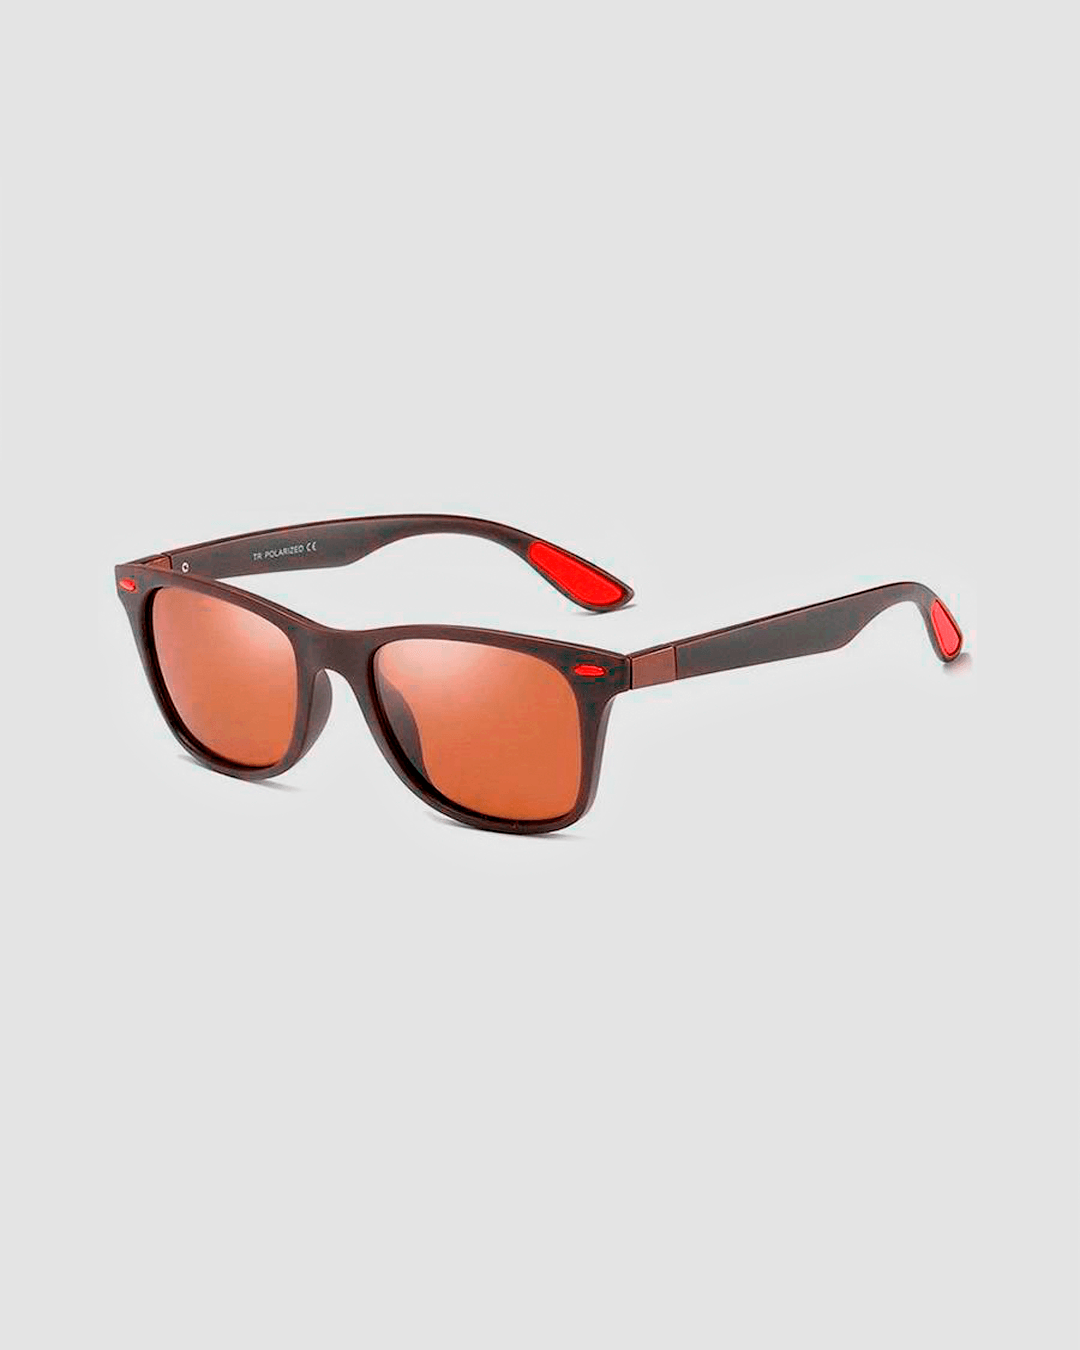 Astrotrain Sunglasses - Sunvoss